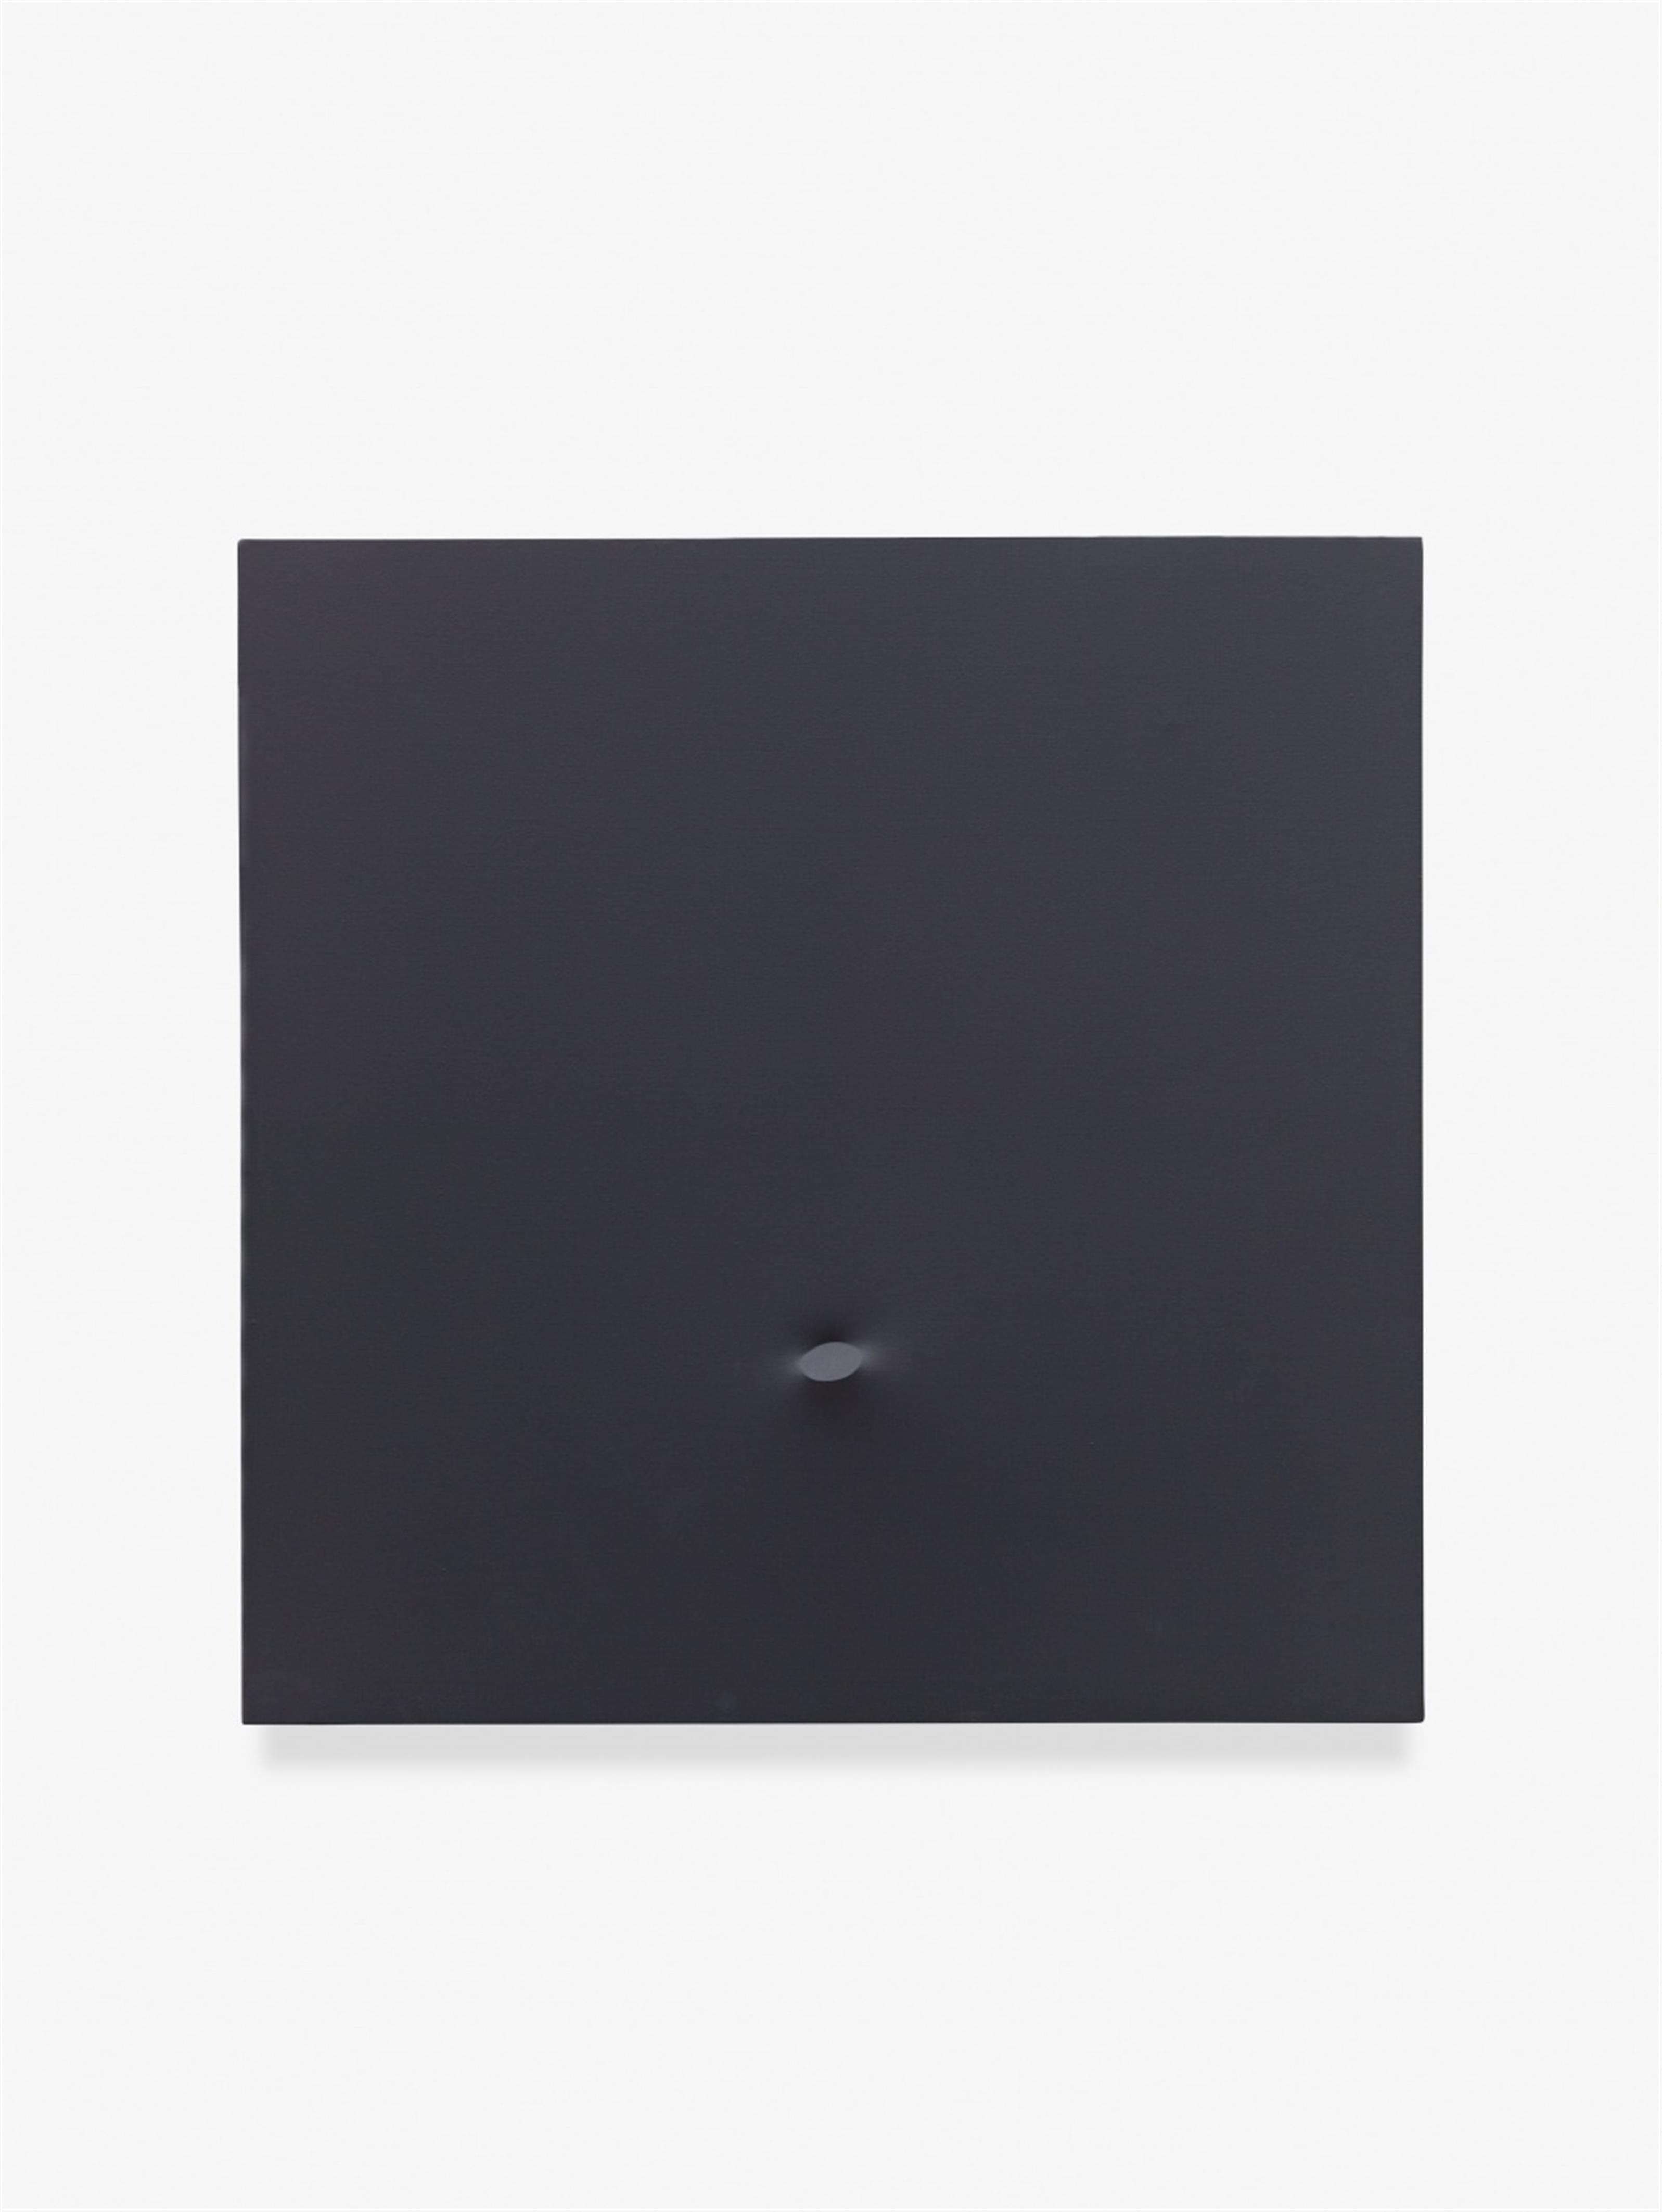 Turi Simeti - Un ovale nero - image-1